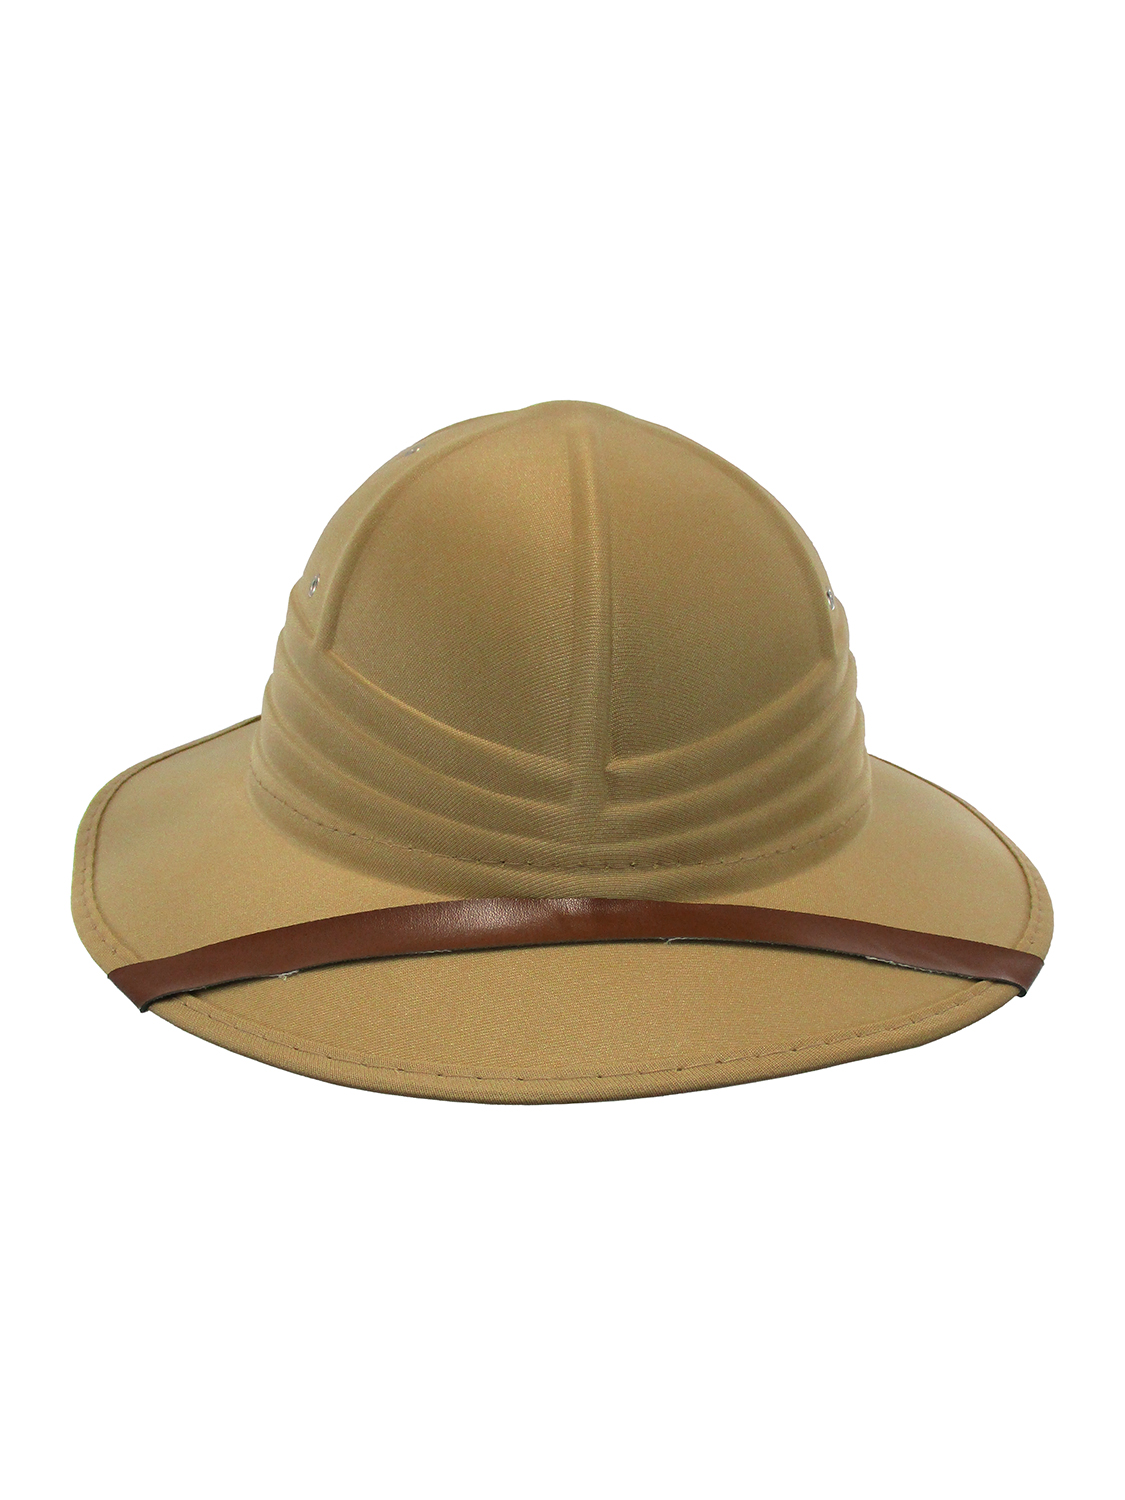 Jungle Safari Pith Helmet Costume Hat Gardening Hiking Fishing Sun ...